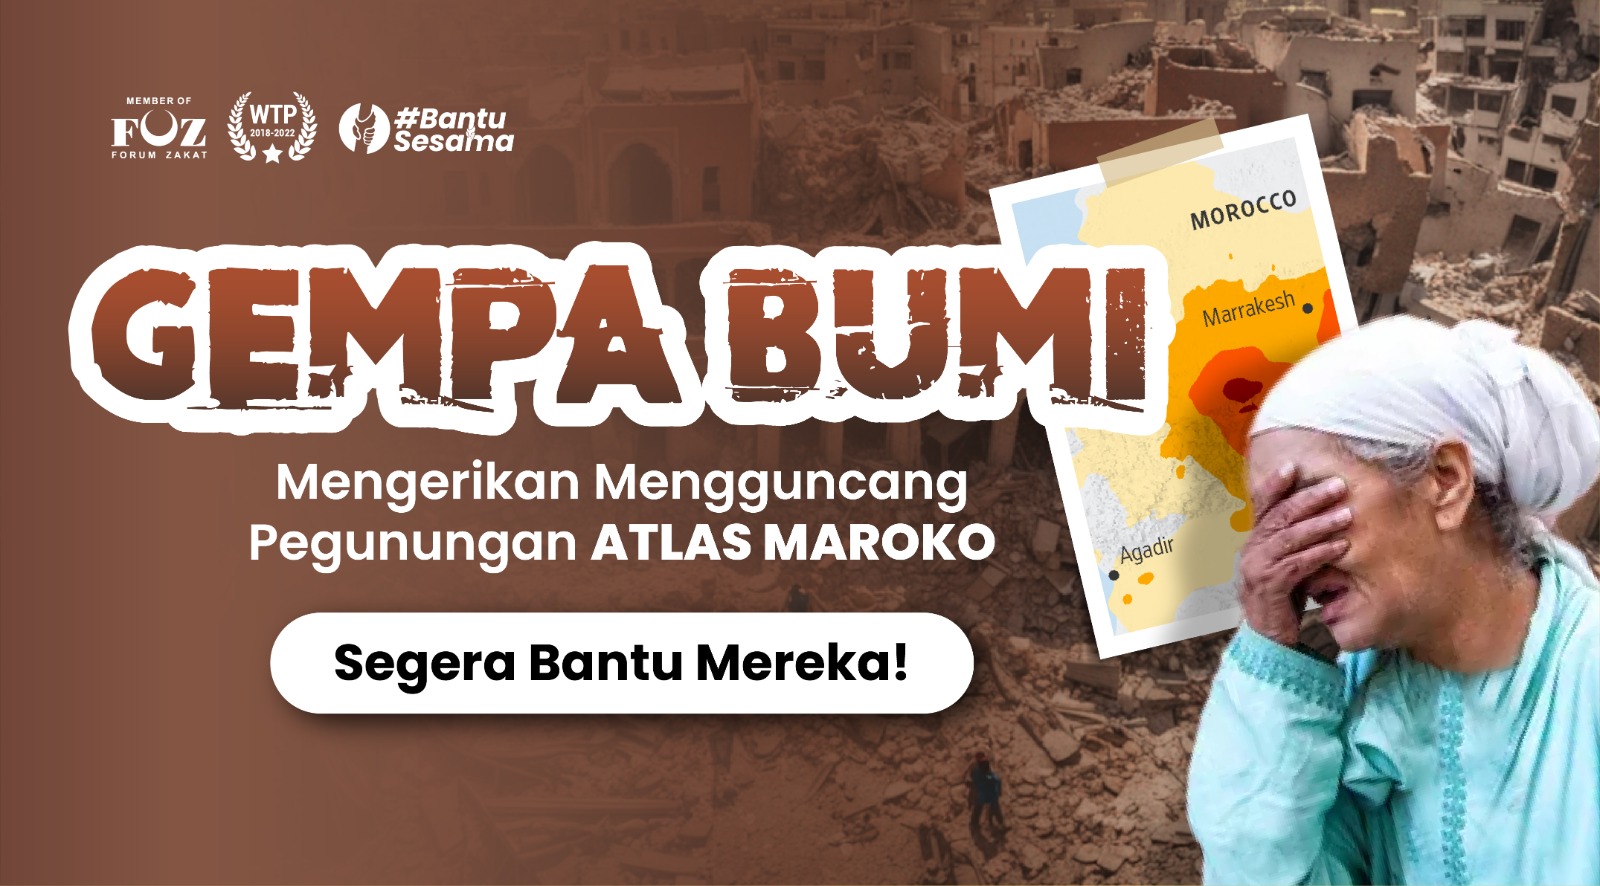 Gempa Bumi Mengerikan Mengguncang Pegunungan Atlas Maroko, Segera Bantu Mereka! banner